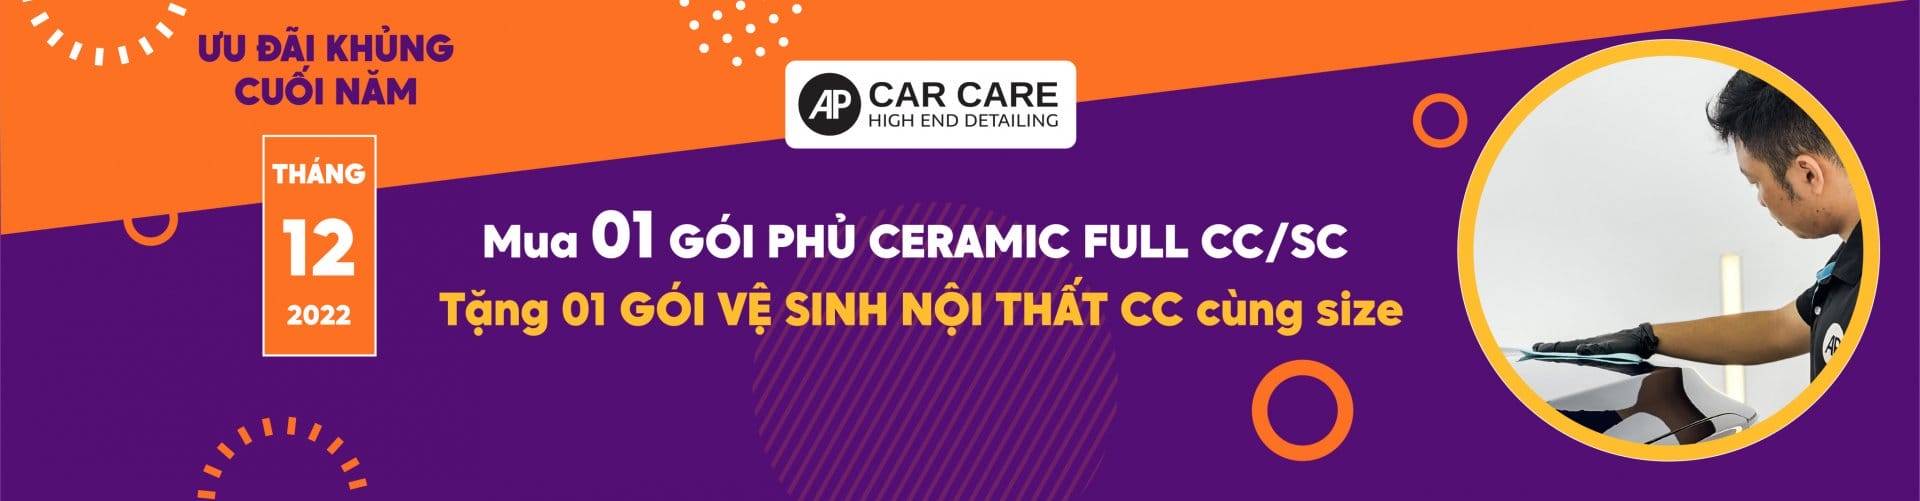 Banner Web AP CAR CARE 4